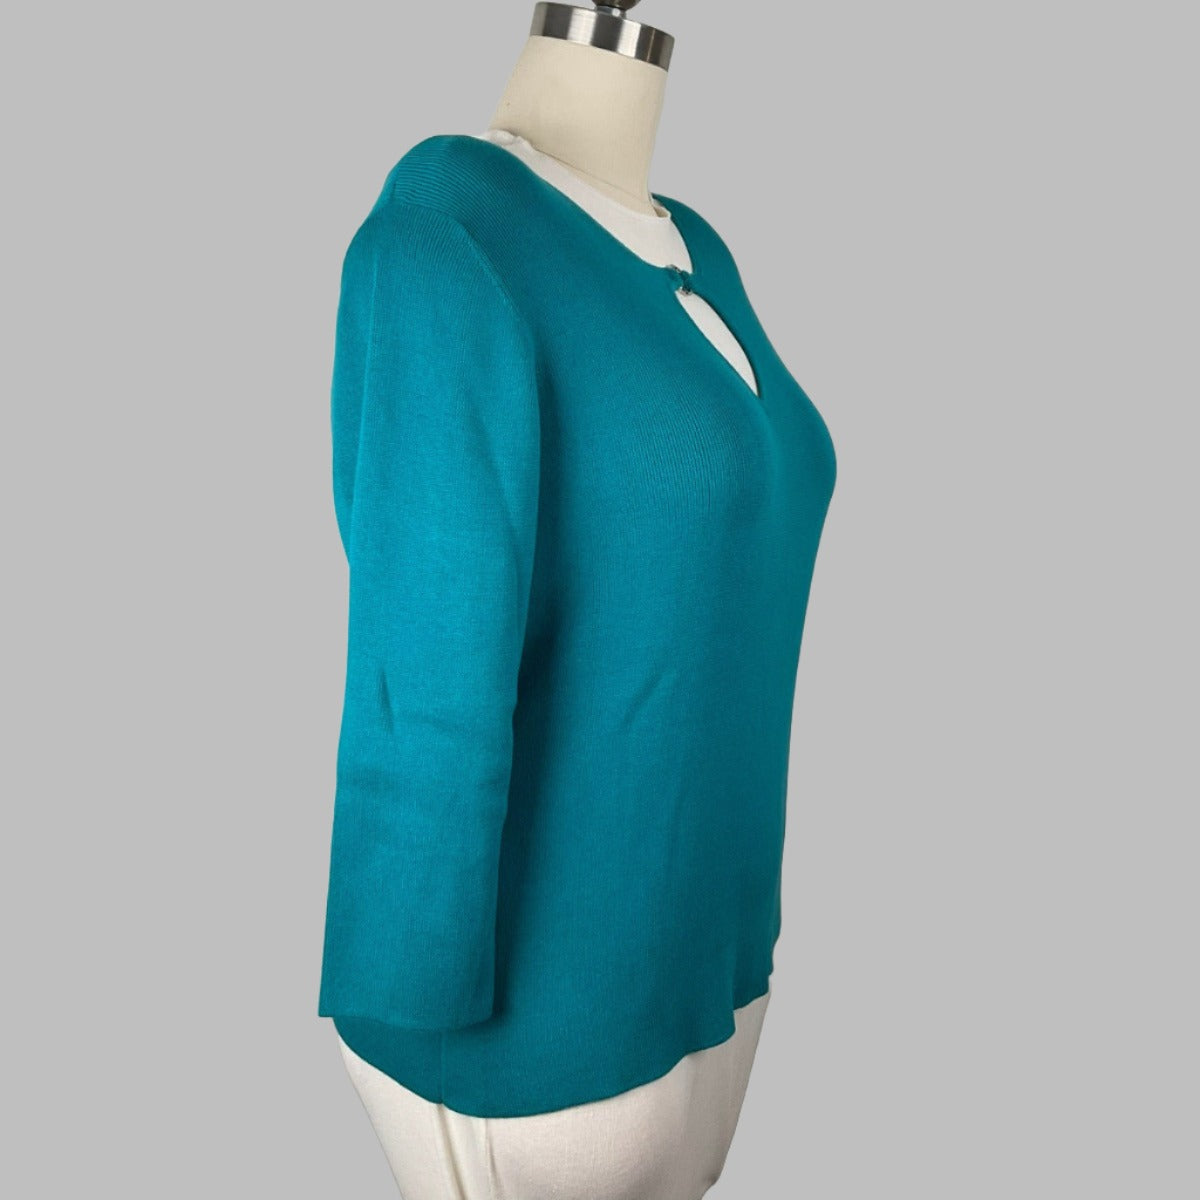 Women's Pierre Cardin Turquoise Keyhole Sweater XL - Right Side View